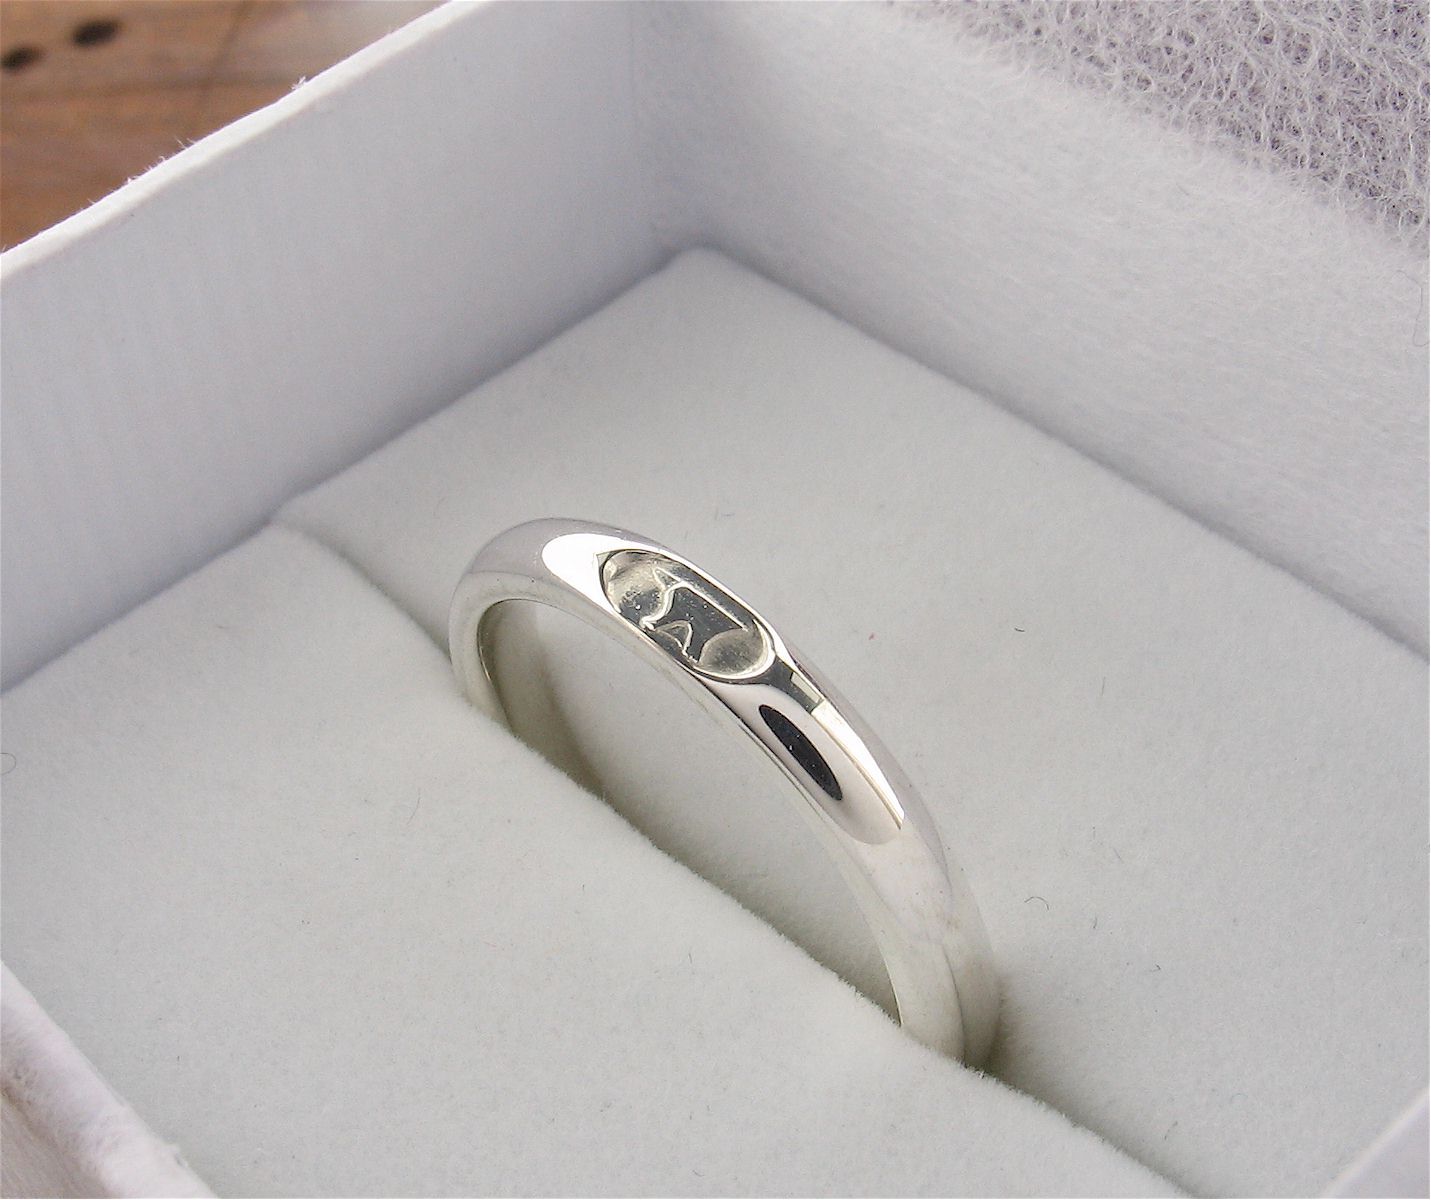 Narrow Gretna Green wedding ring